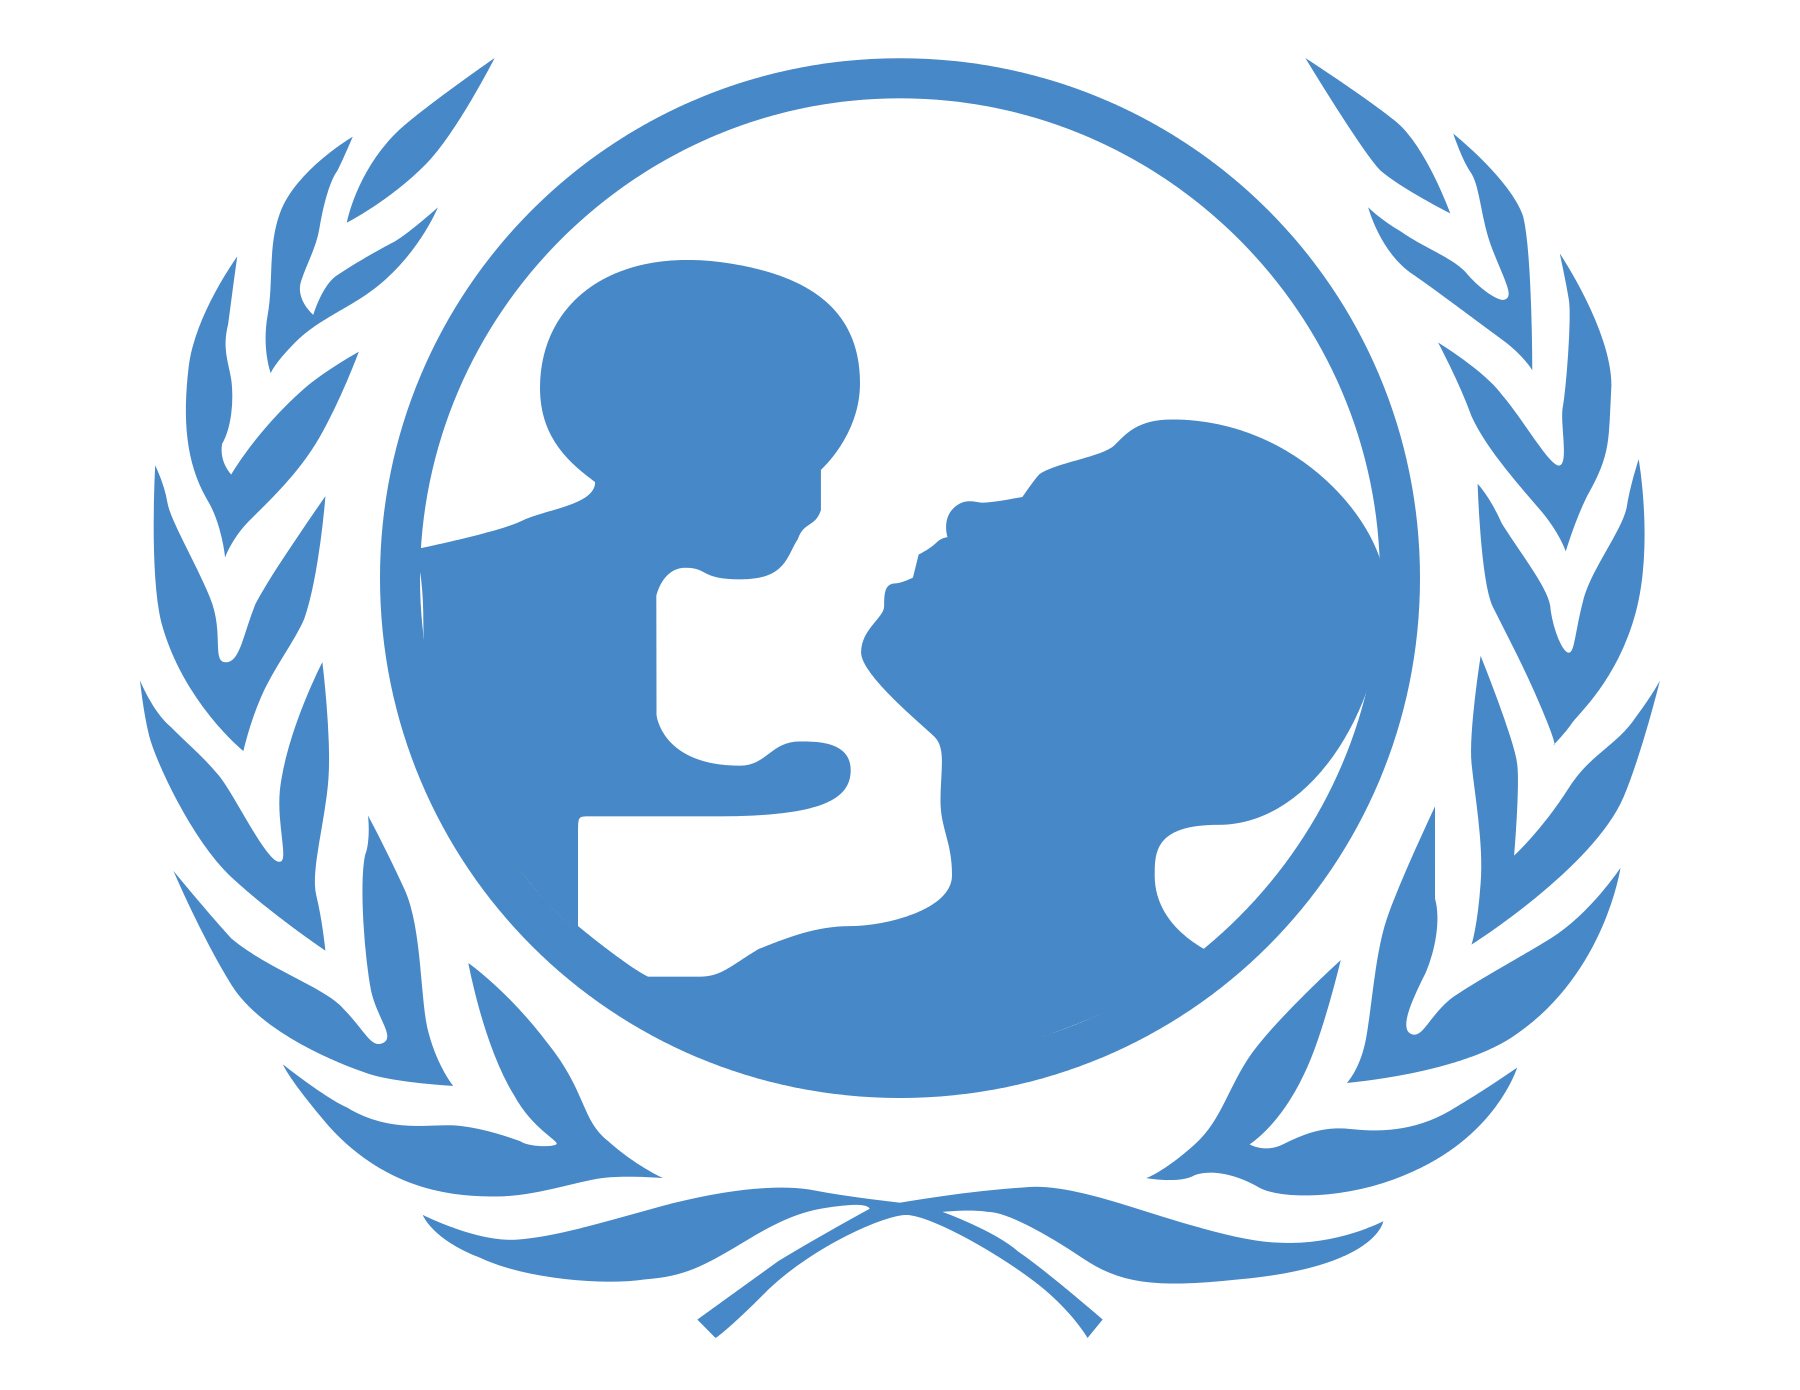 United Nations International Children’s Emergency Fund